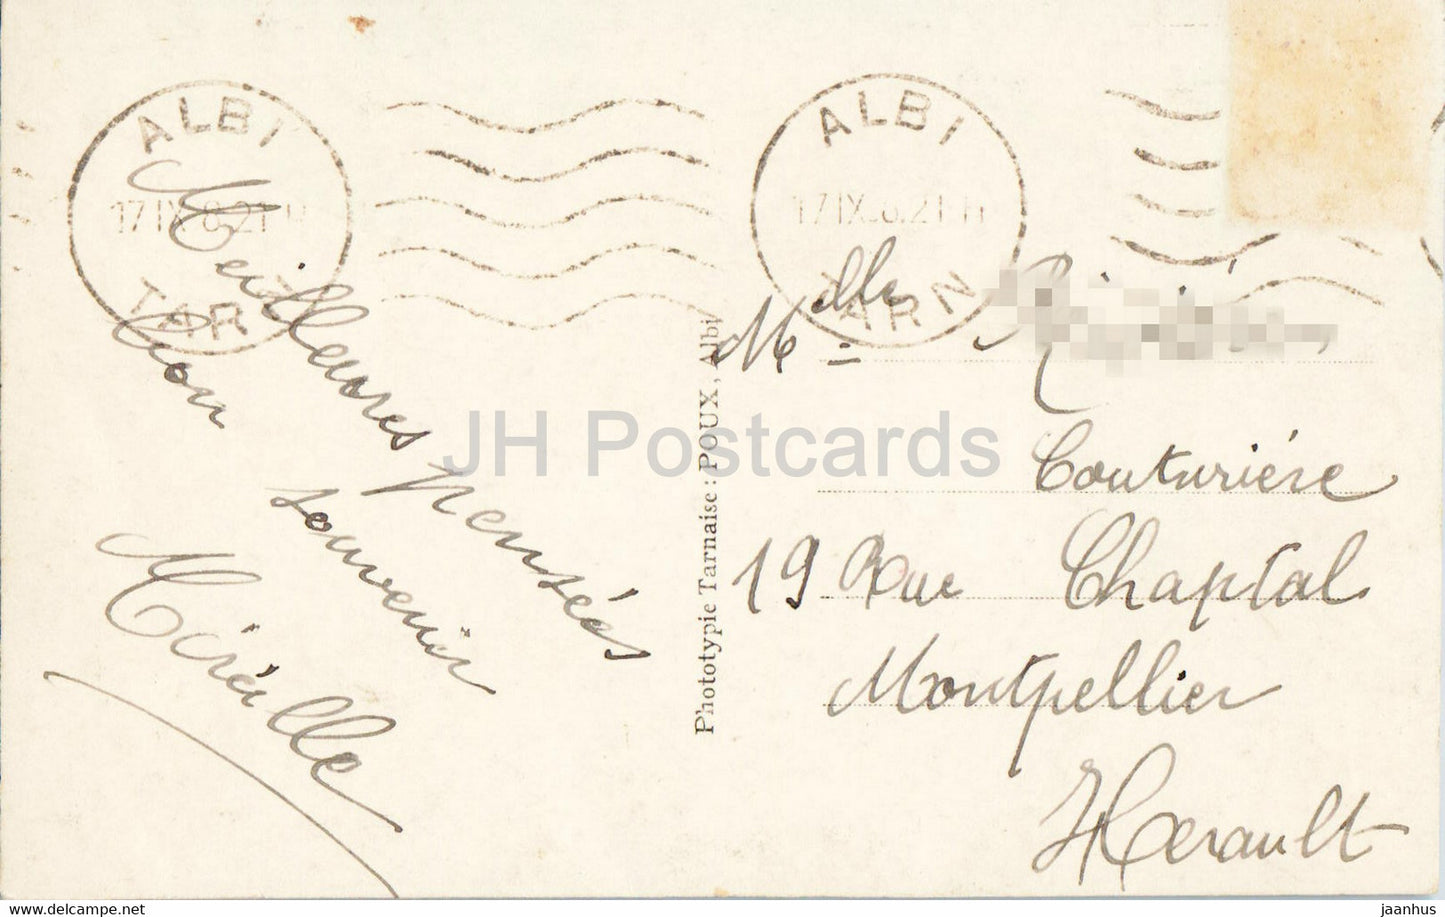 Albi - Viaduc du Chemin de Fer et Cathedrale - cathedral - 28 - old postcard - 1921 - France - used